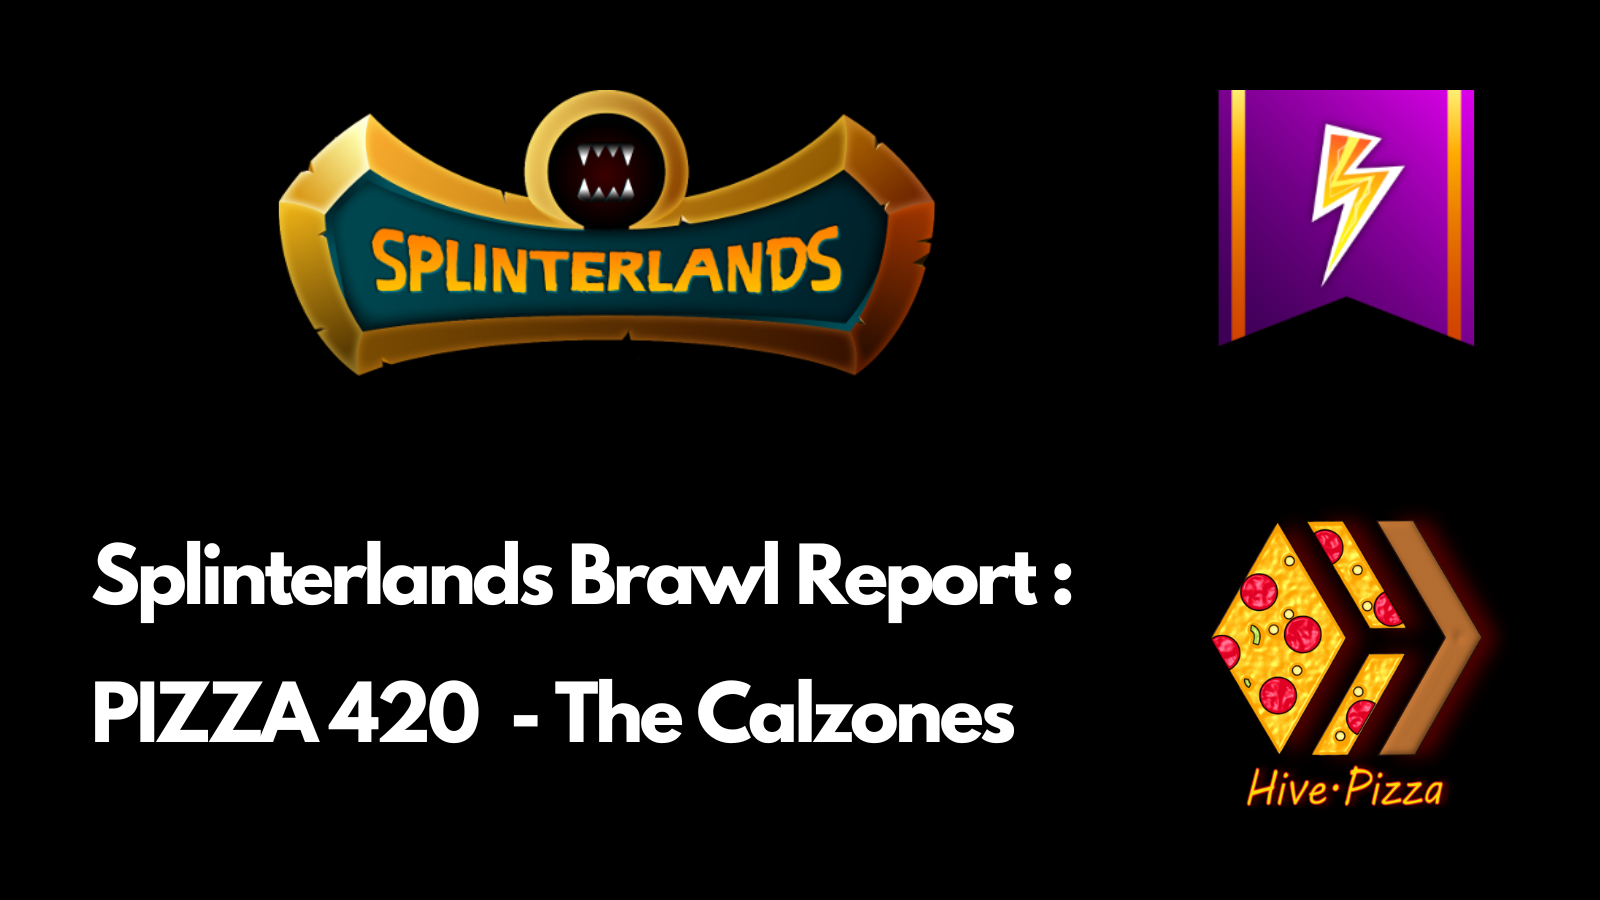 @candnpg/splinterlands-pizza-brawl-report-rhp19w